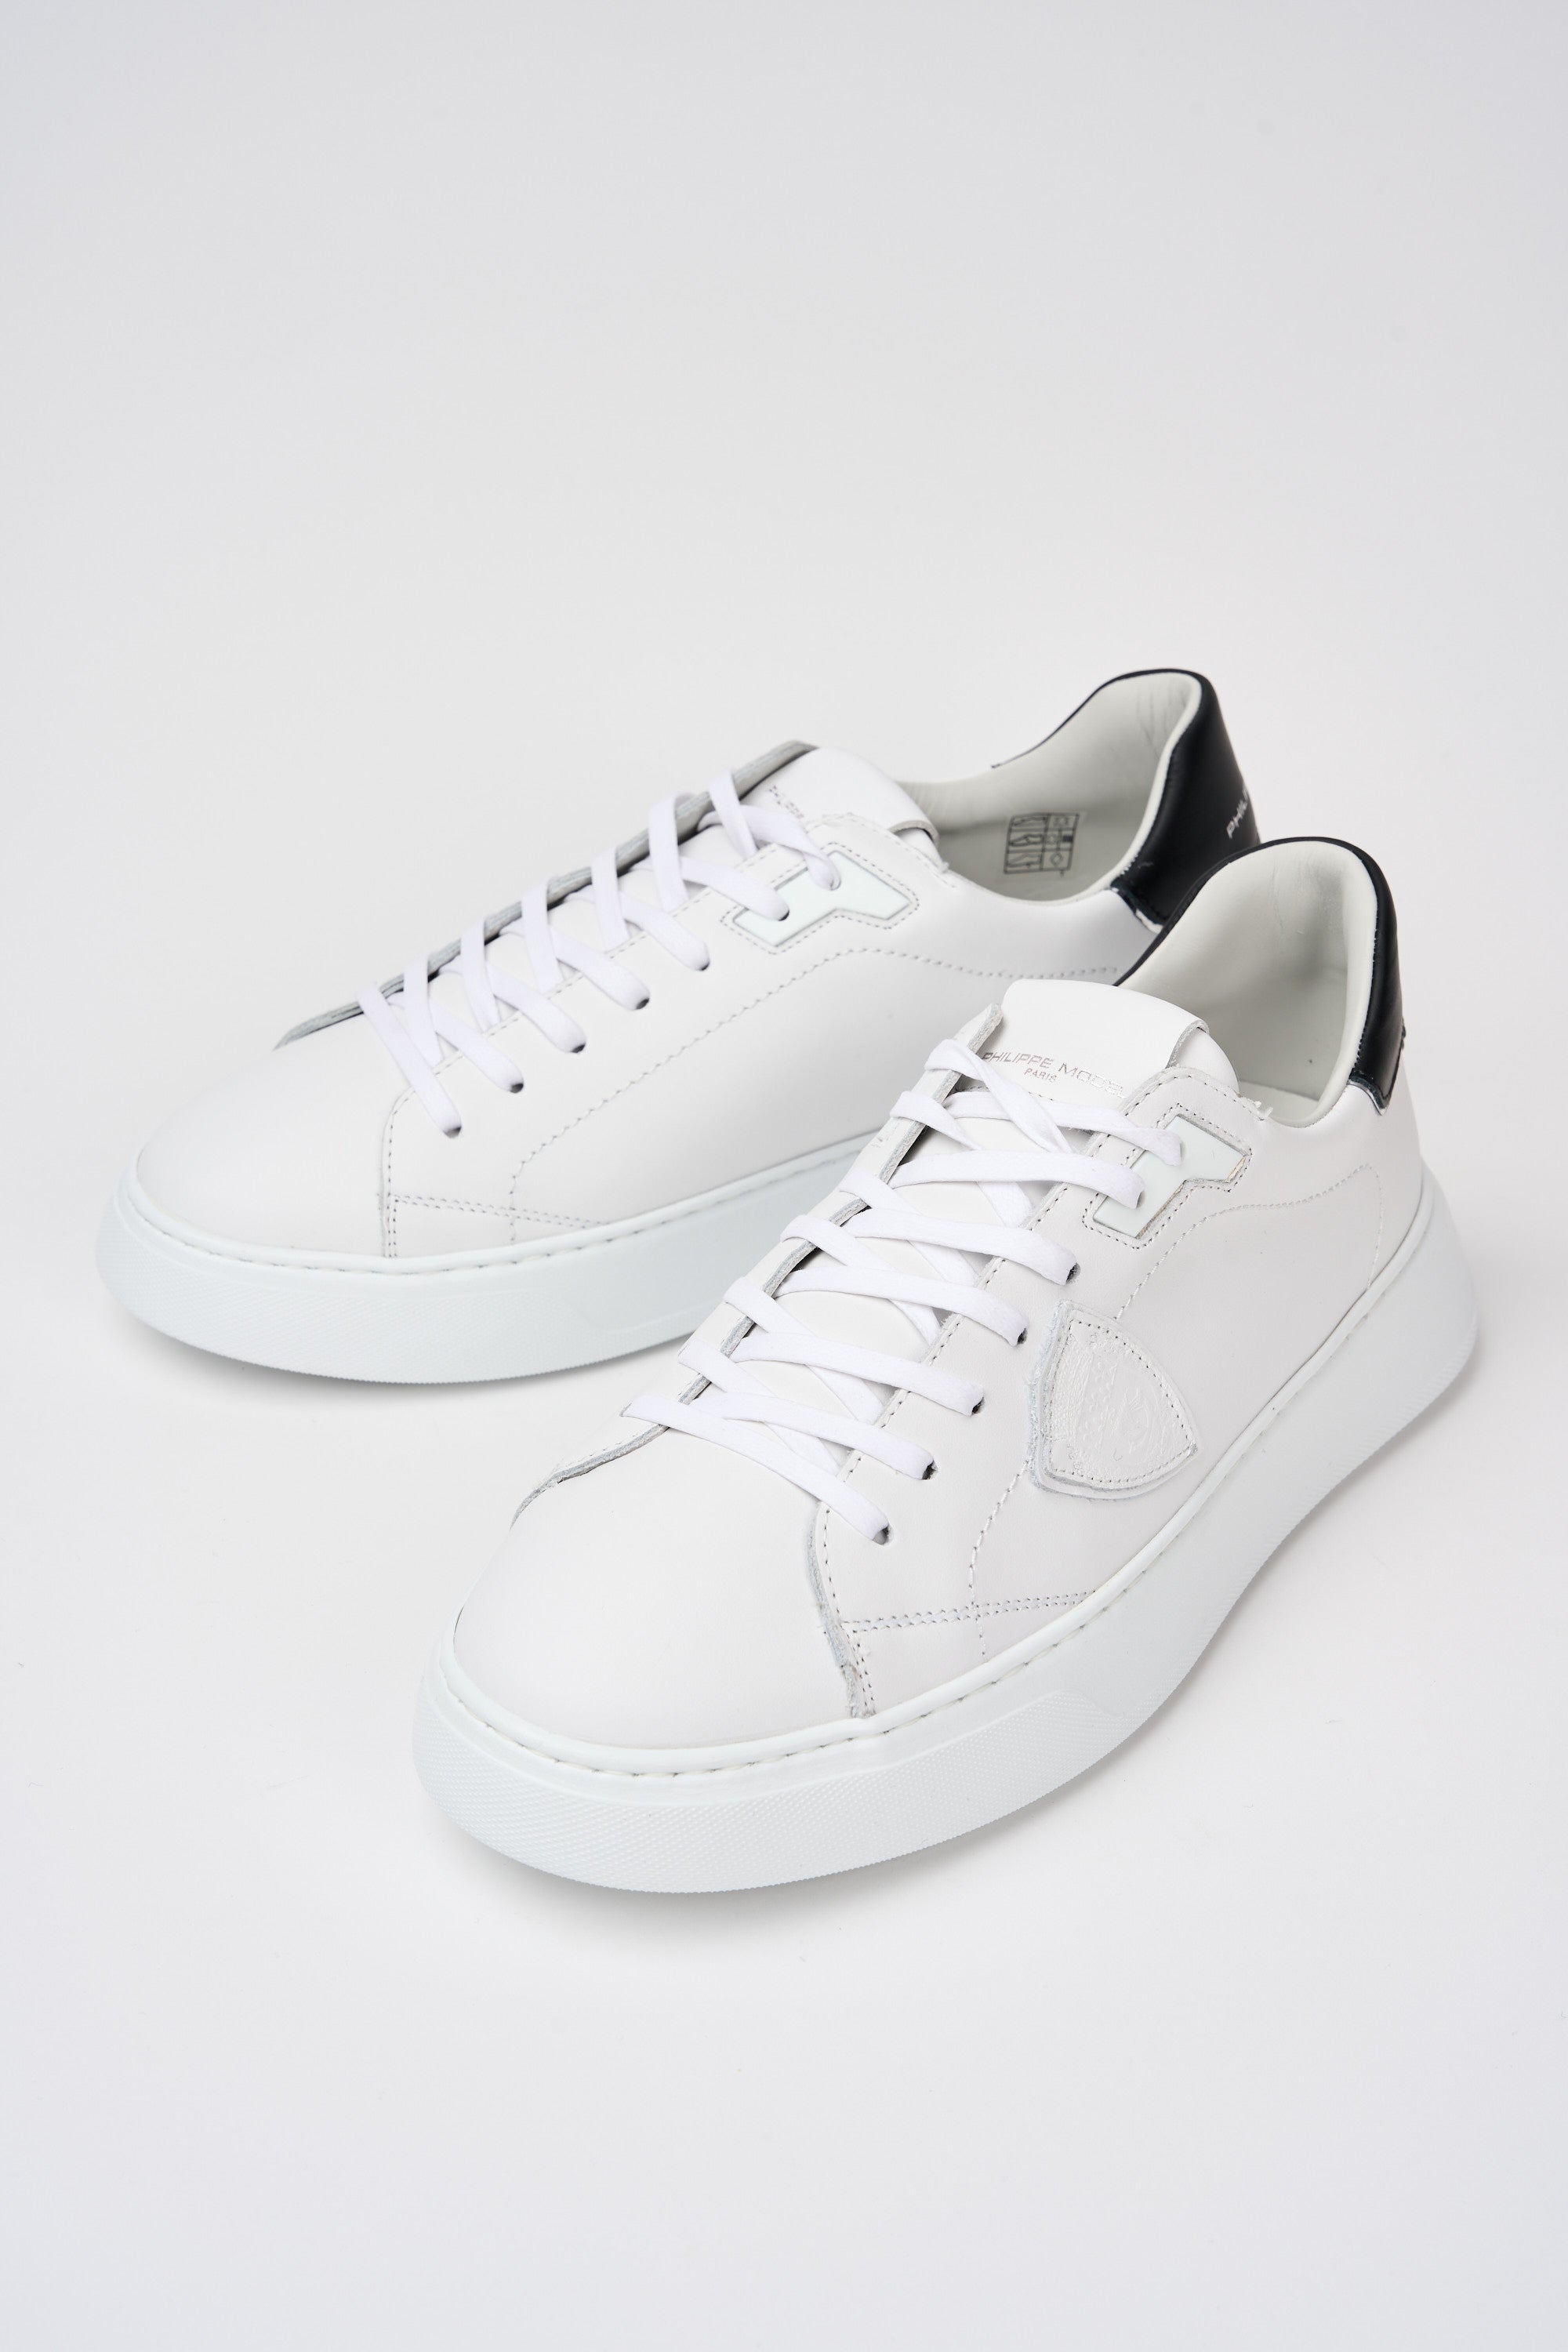 Philippe Model Sneaker Temple Leather White/Black-7